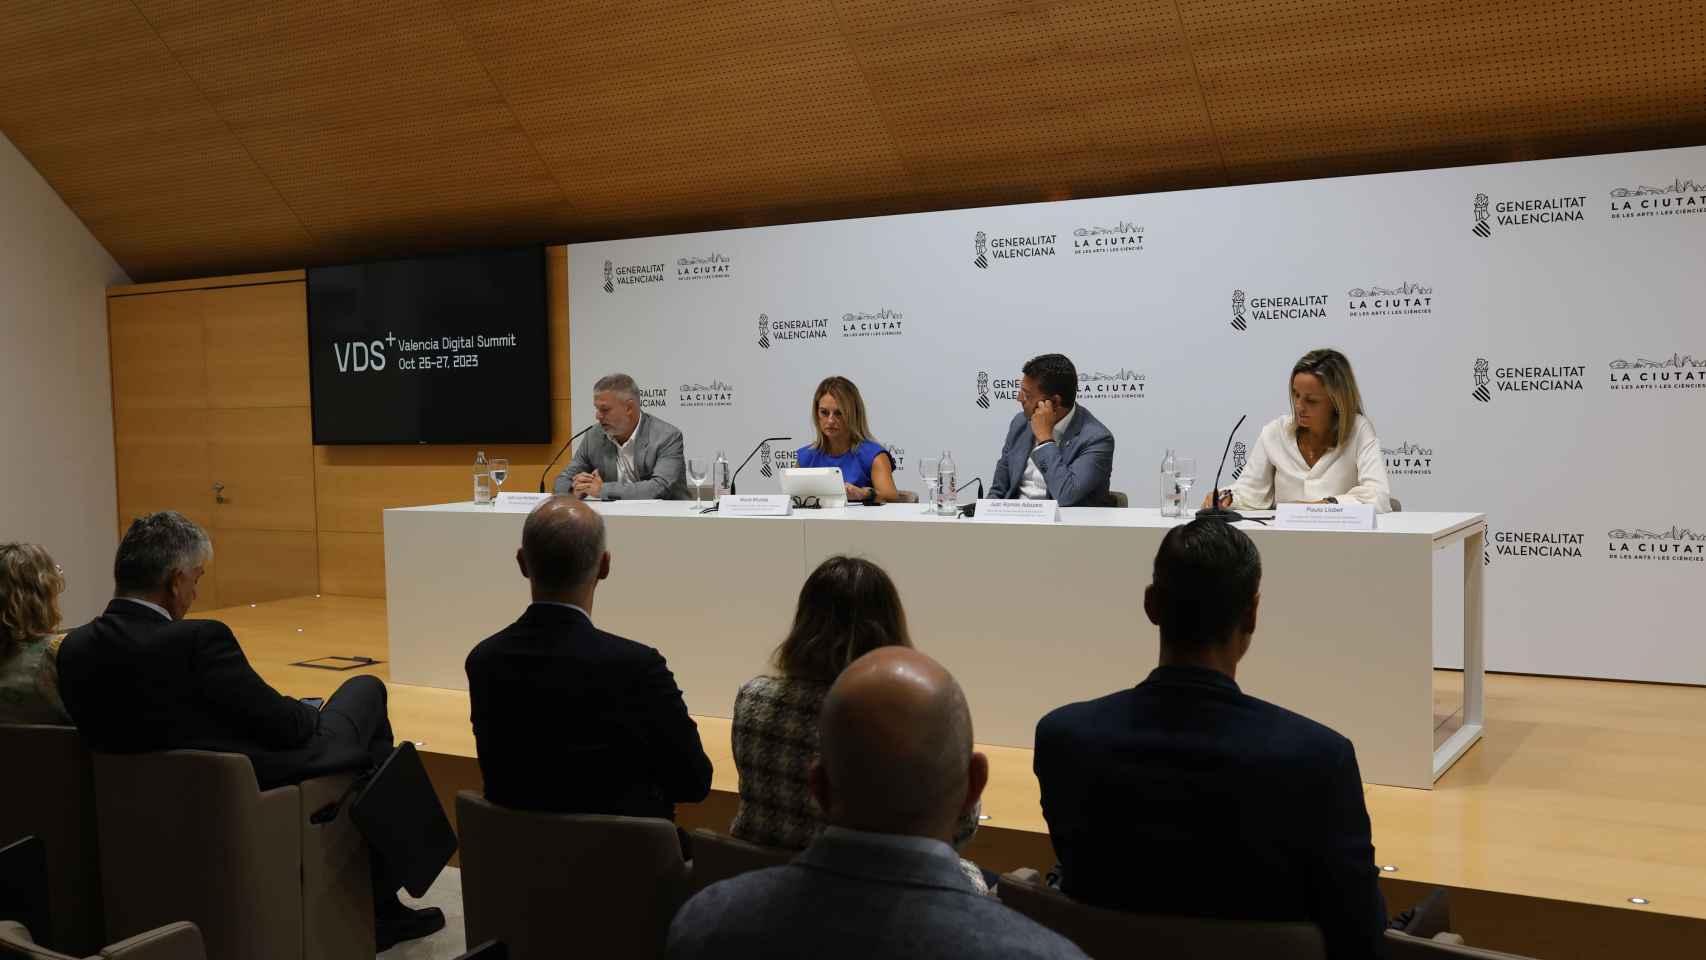 De izquierda a derecha: Juan Luis Hortelano, Nuria Montes, Juan Ramón Adsuara y Paula Llobet.